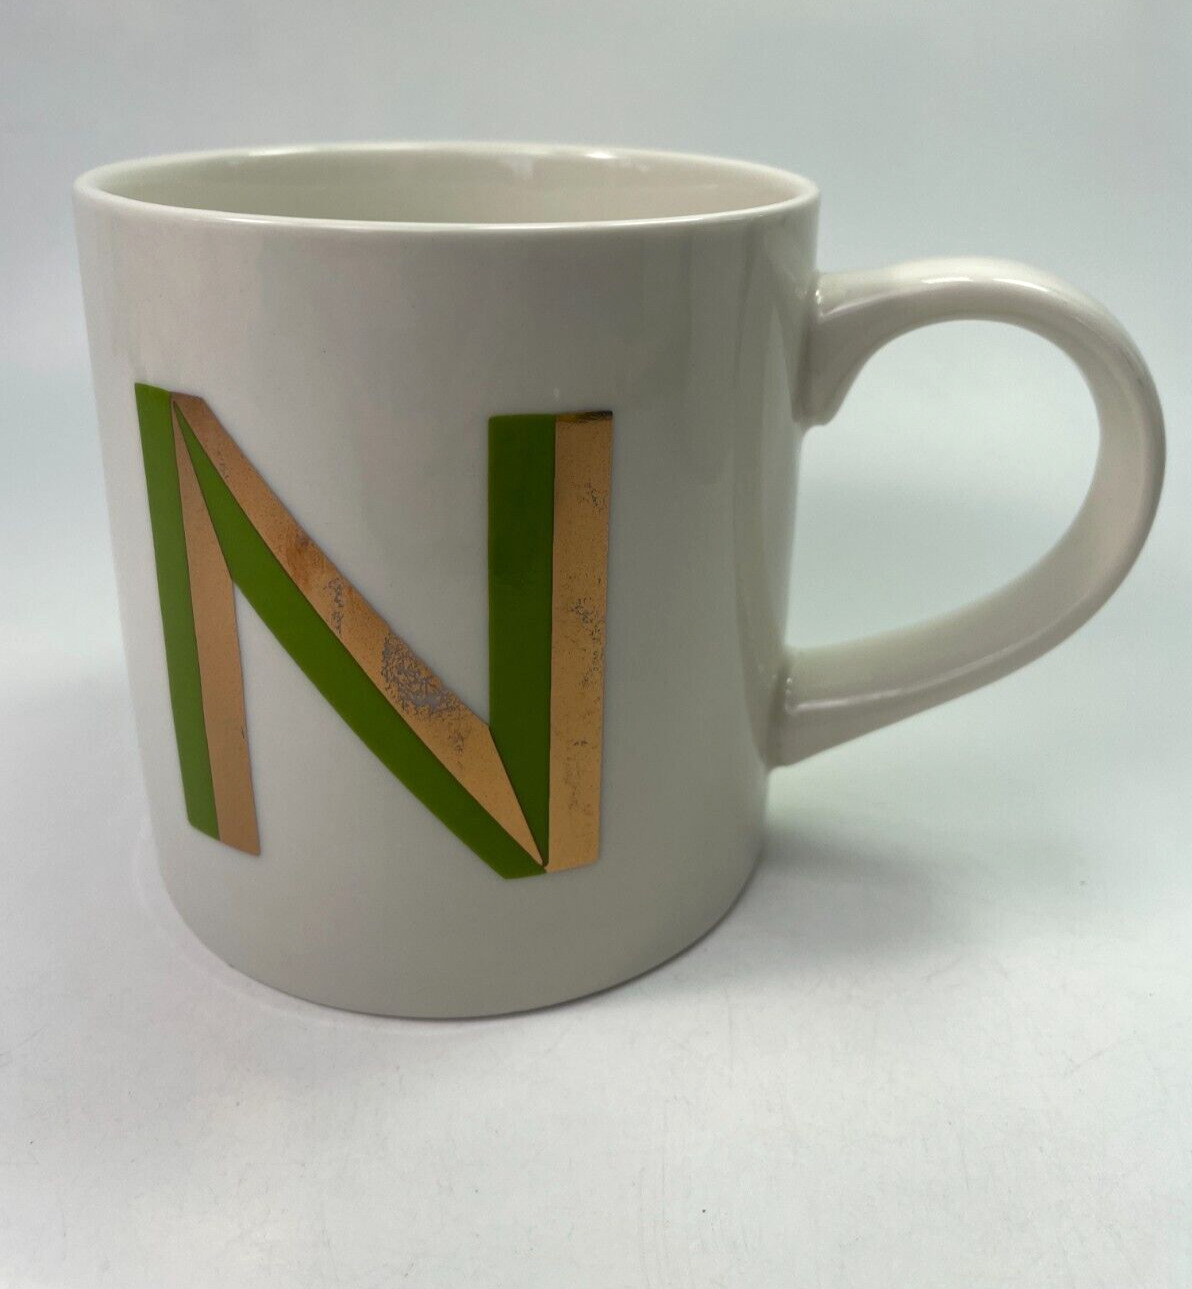 Opalhouse Coffee Mug Monogram Letter N Personalized 14 oz Stoneware Cup B60